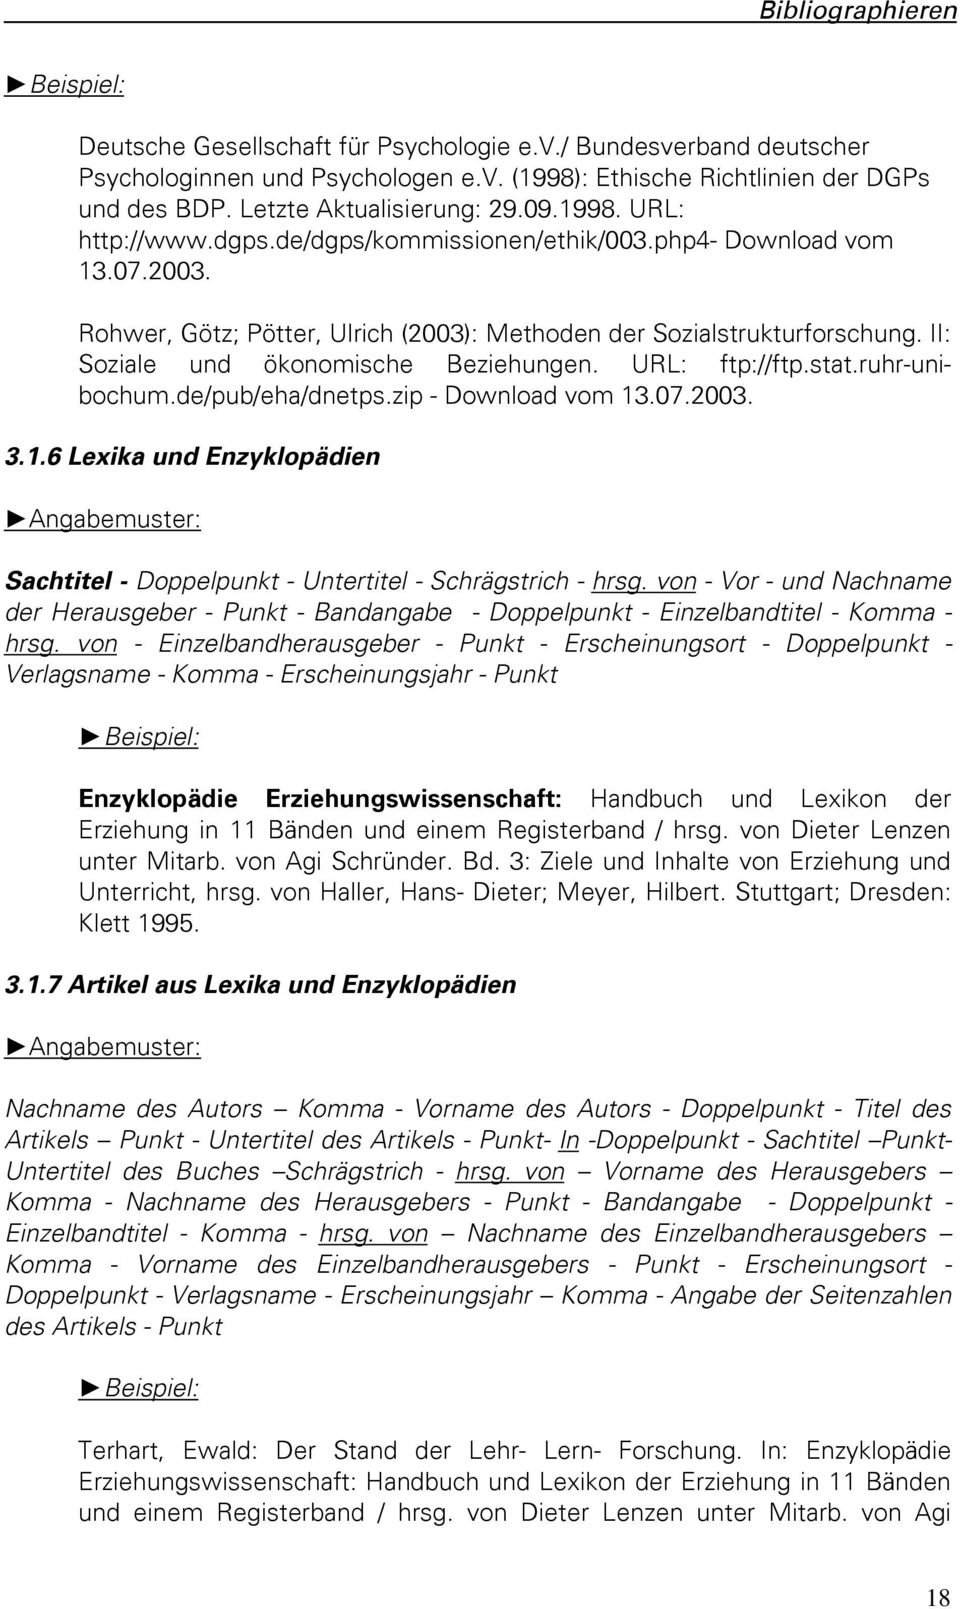 II: Soziale und ökonomische Beziehungen. URL: ftp://ftp.stat.ruhr-unibochum.de/pub/eha/dnetps.zip - Download vom 13